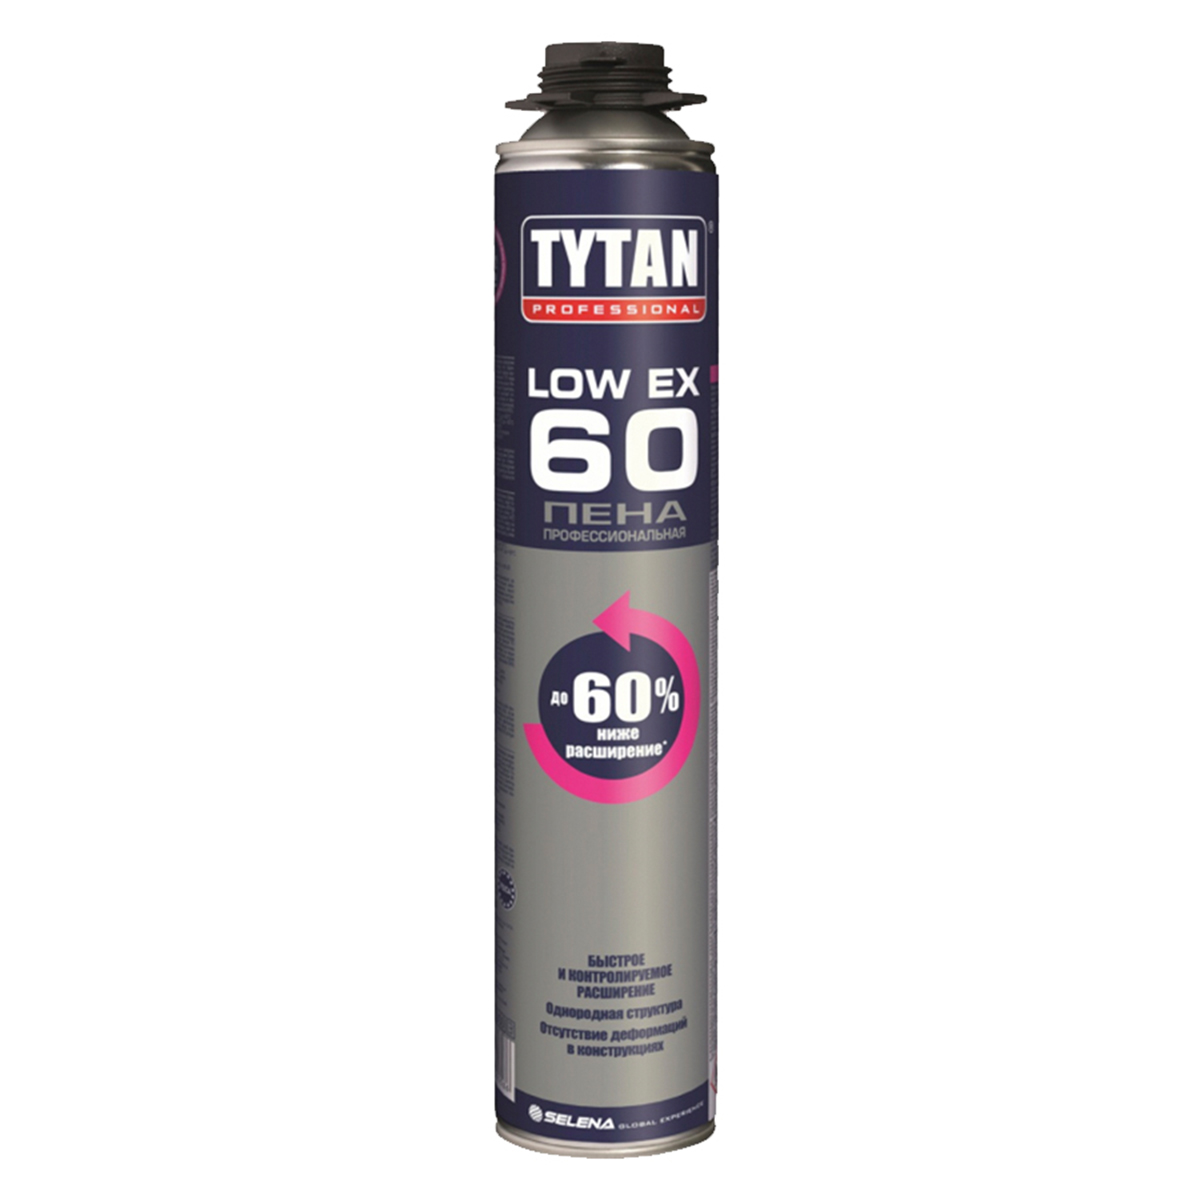  TYTAN Professional LOW EX 60  